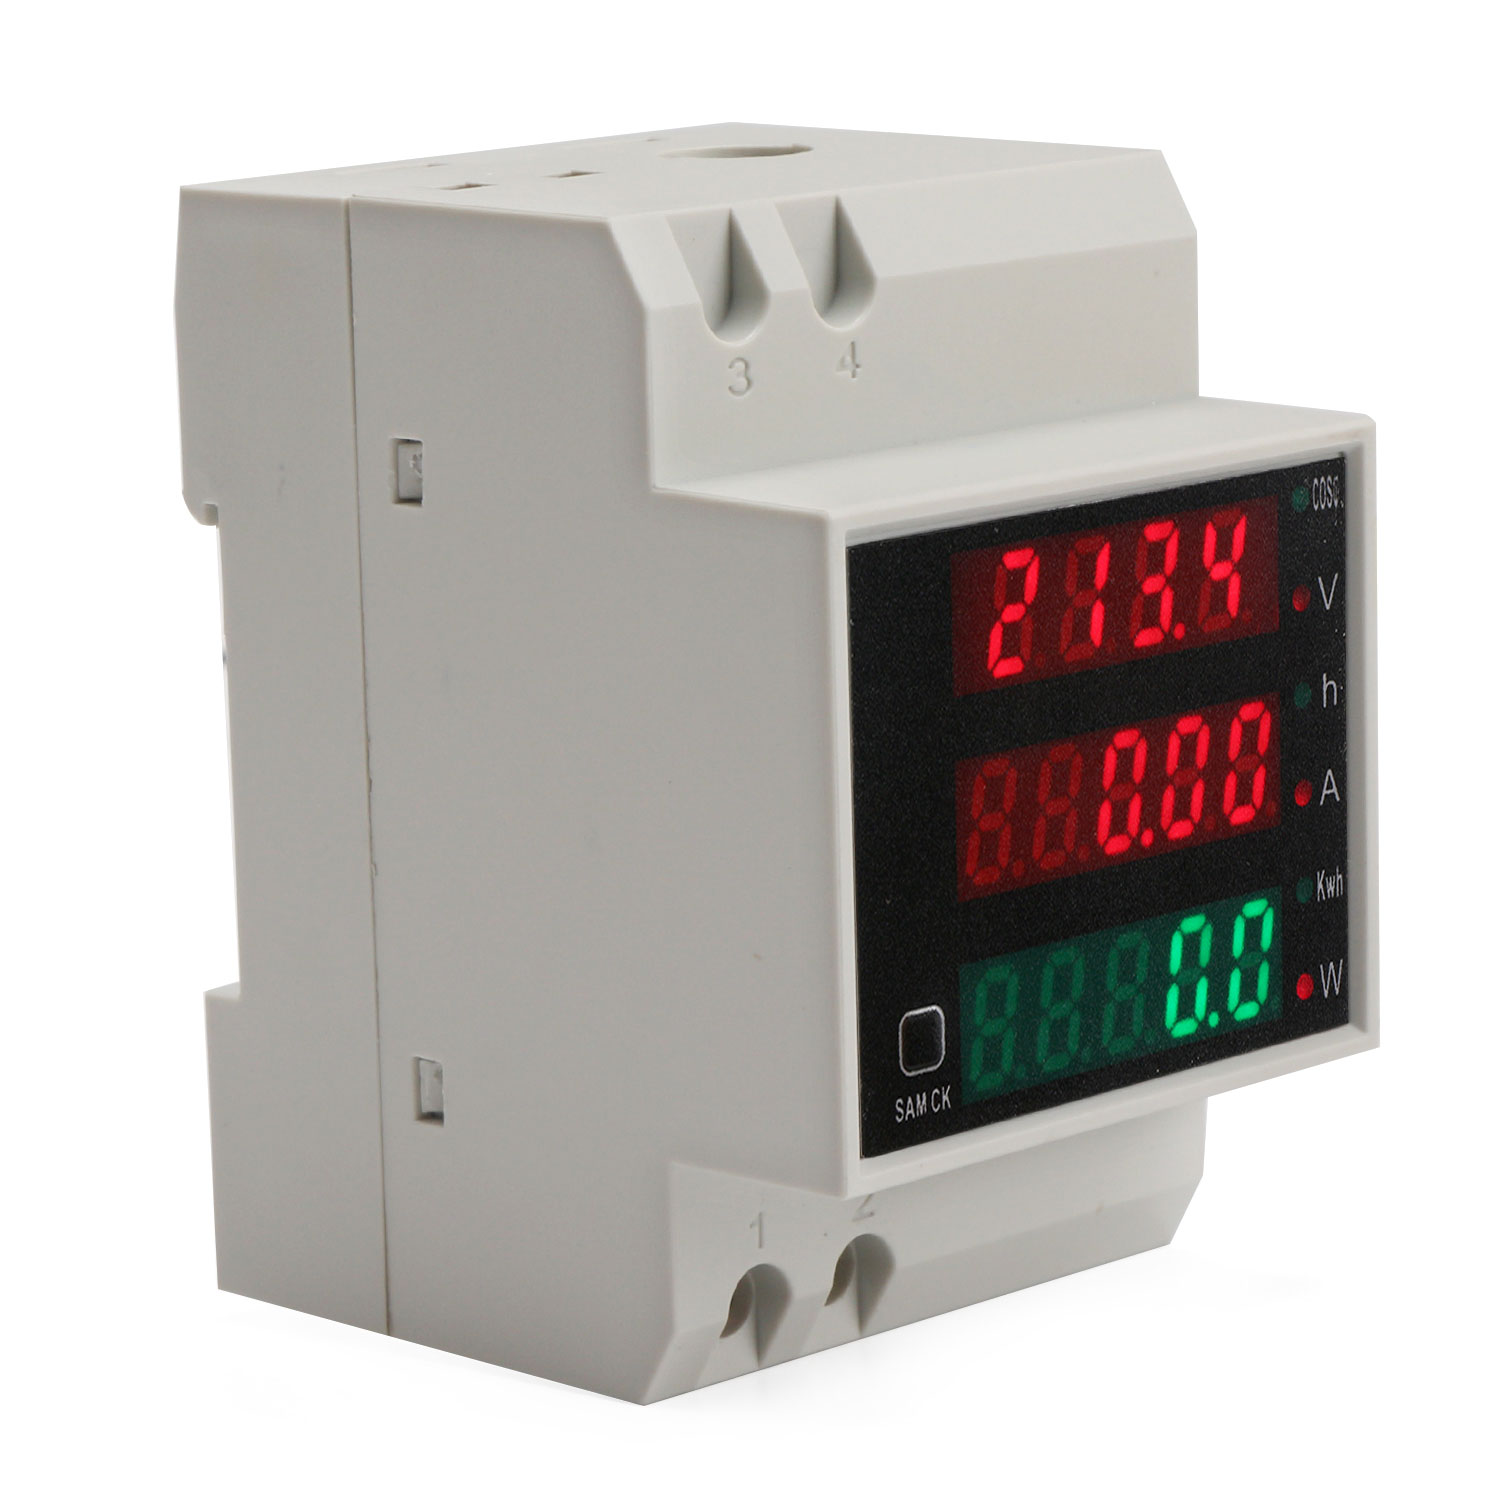 Gooi Aangenaam kennis te maken doneren Din rail Power Monitor AC 80~300V/100A/3000W99999kwh Digital  Voltage/Current/Power/Energy Meter